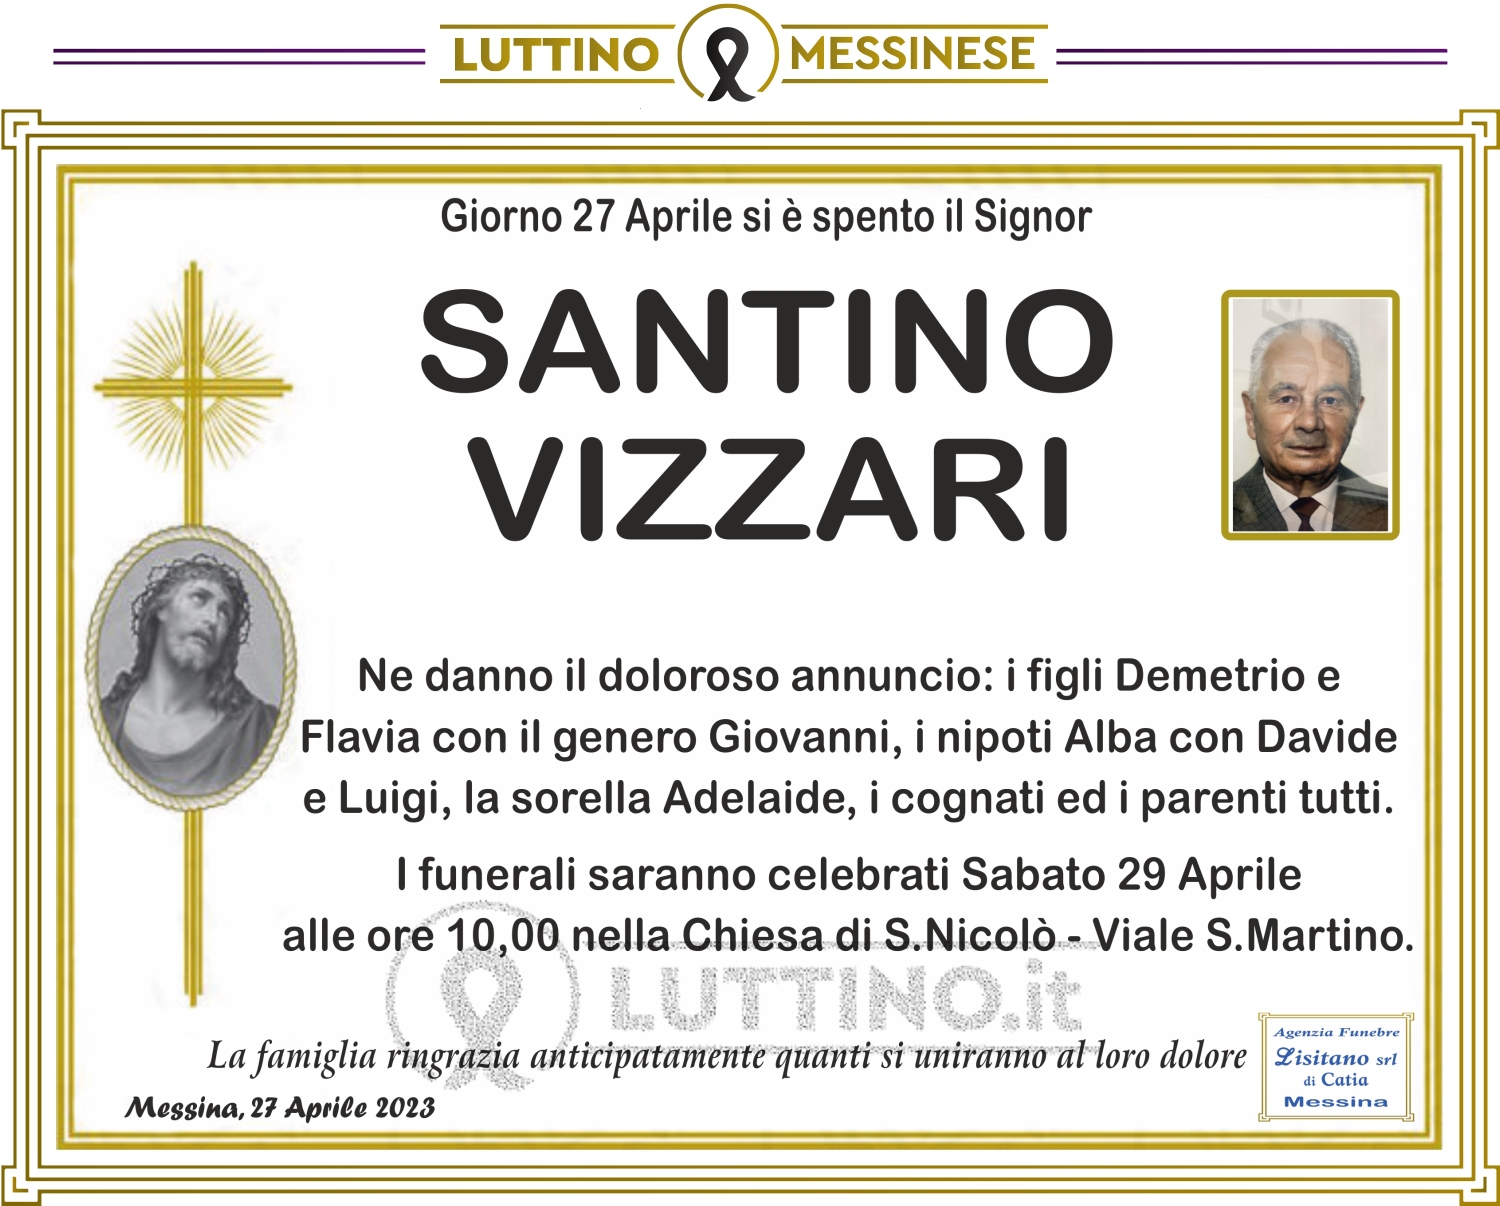 Santino Vizzari